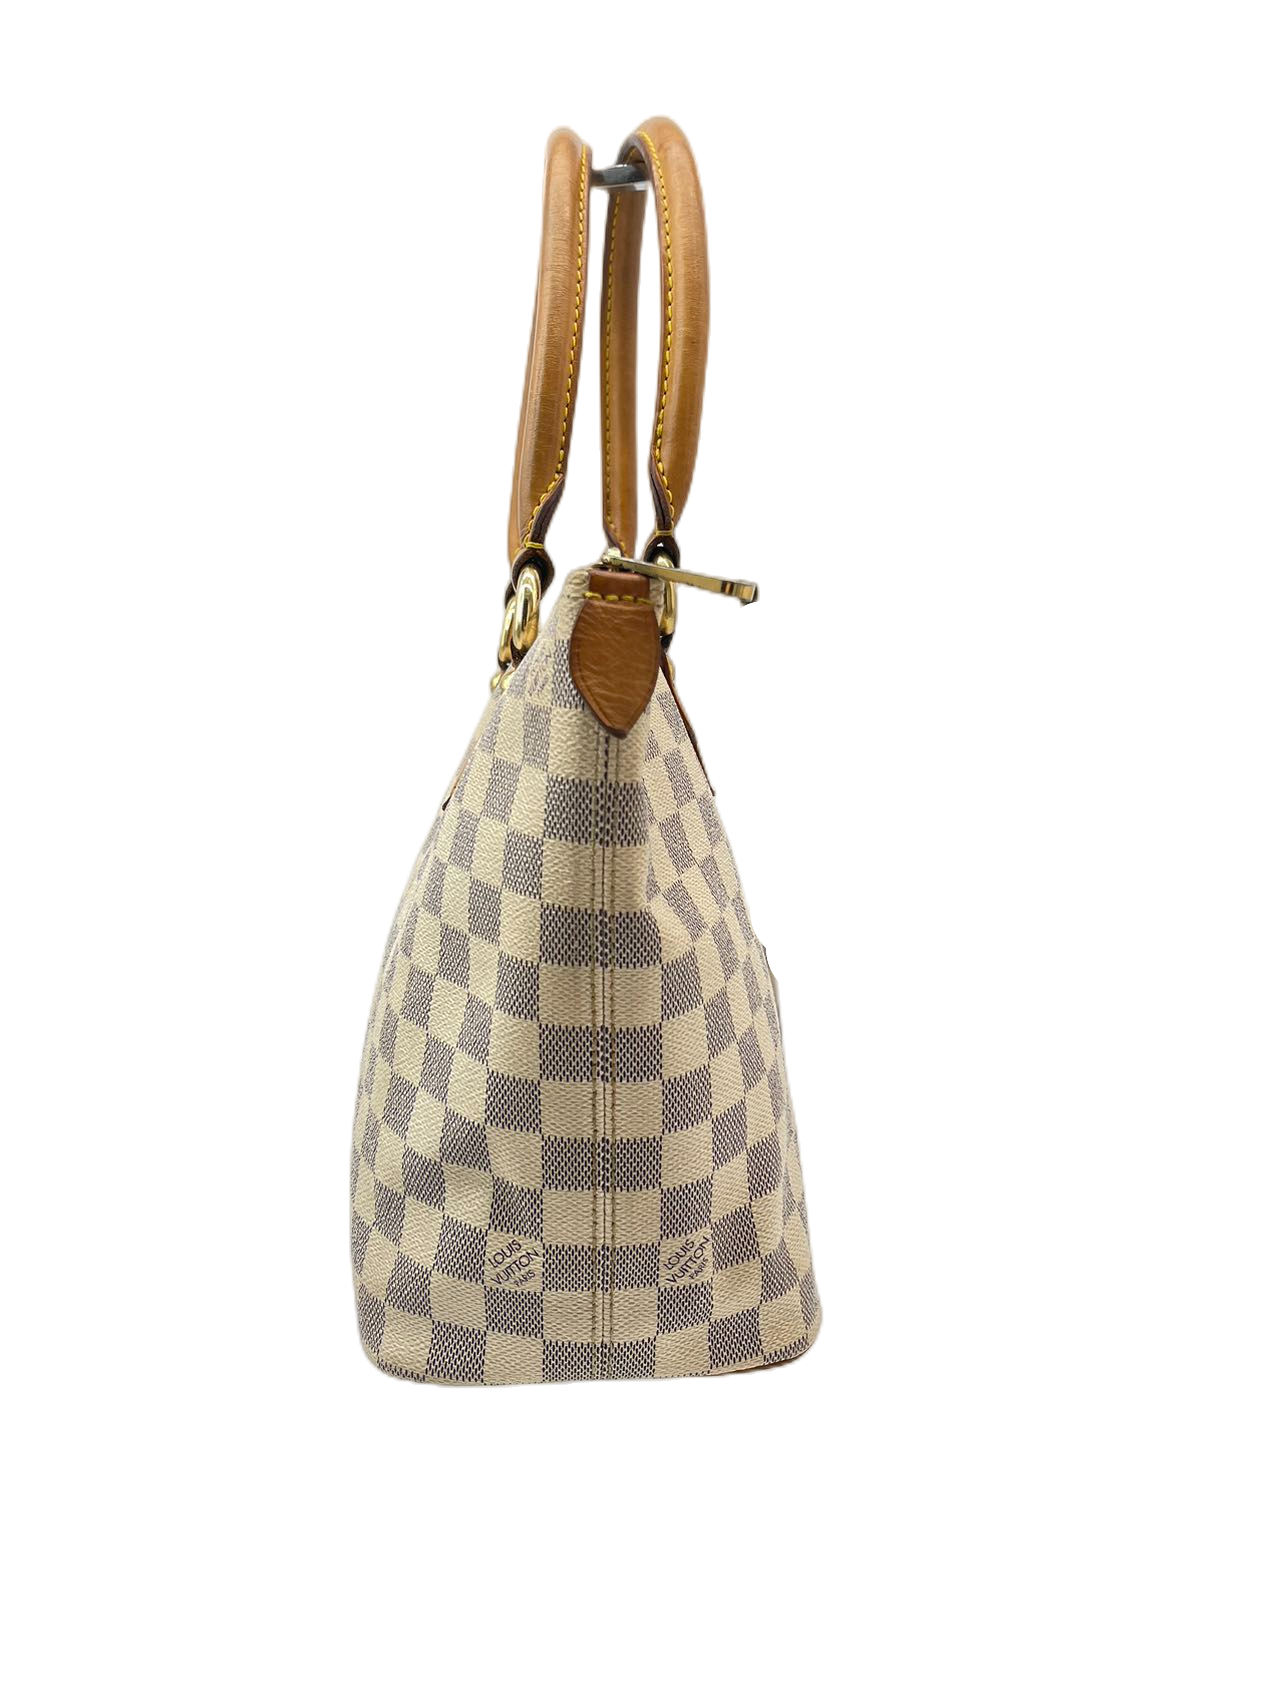 Preloved Louis Vuitton Damier Azur Small Totes Shoulder bag